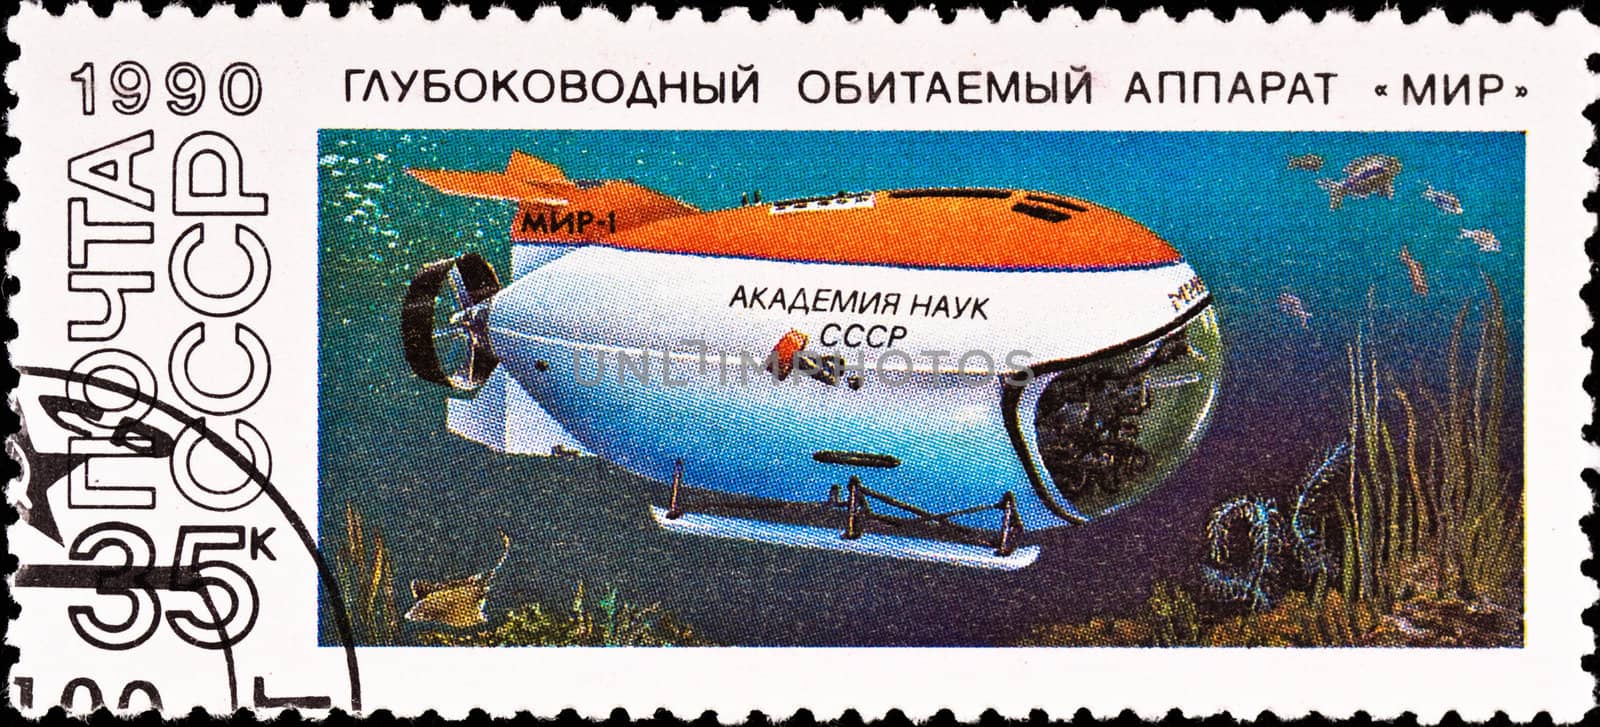 USSR - CIRCA 1990: postage stamp shows submarine "mir", circa 1990